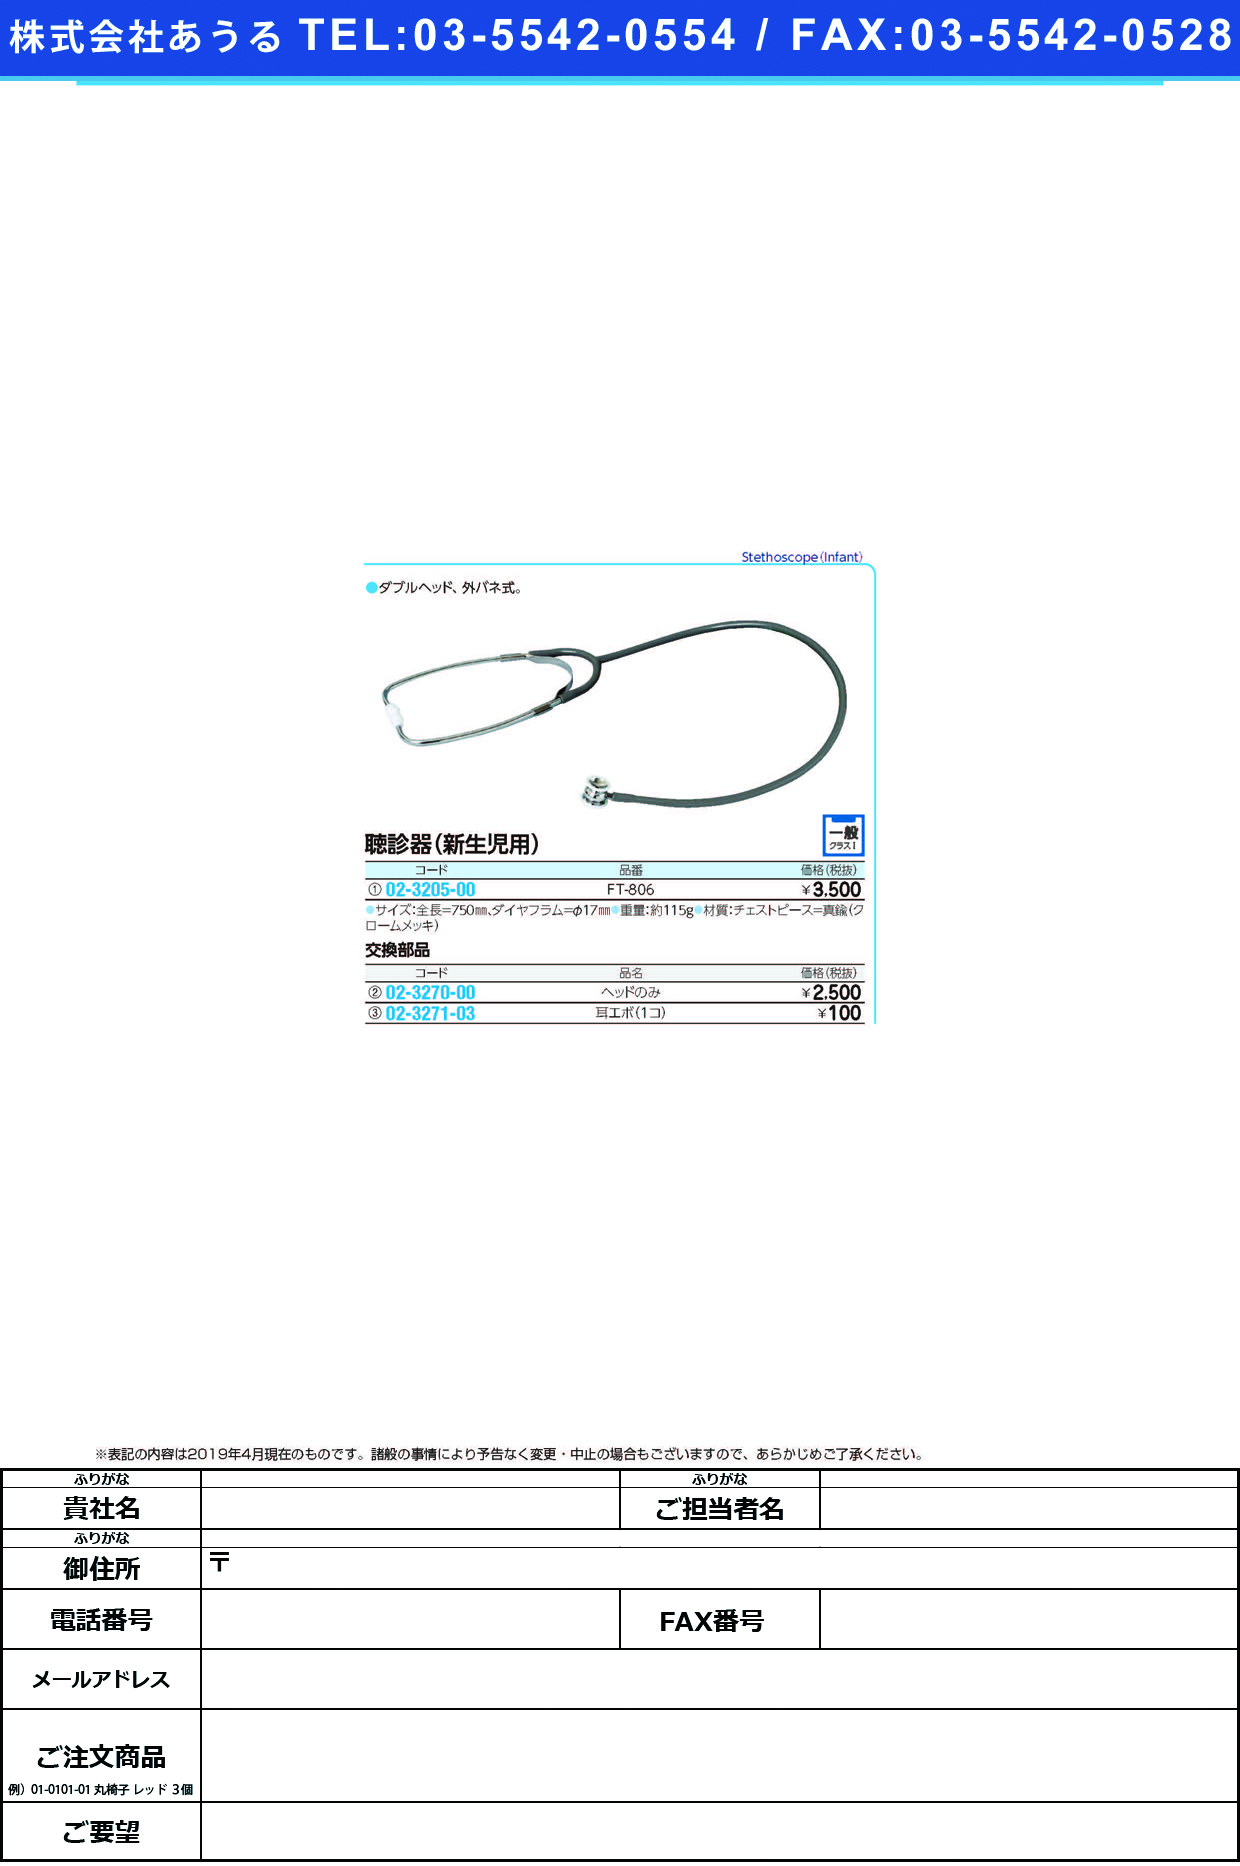 (02-3270-00)聴診器用ヘッド（新生児用）  ﾁｮｳｼﾝｷﾖｳﾍｯﾄﾞ(ｼﾝｾｲｼﾞ)【1個単位】【2019年カタログ商品】